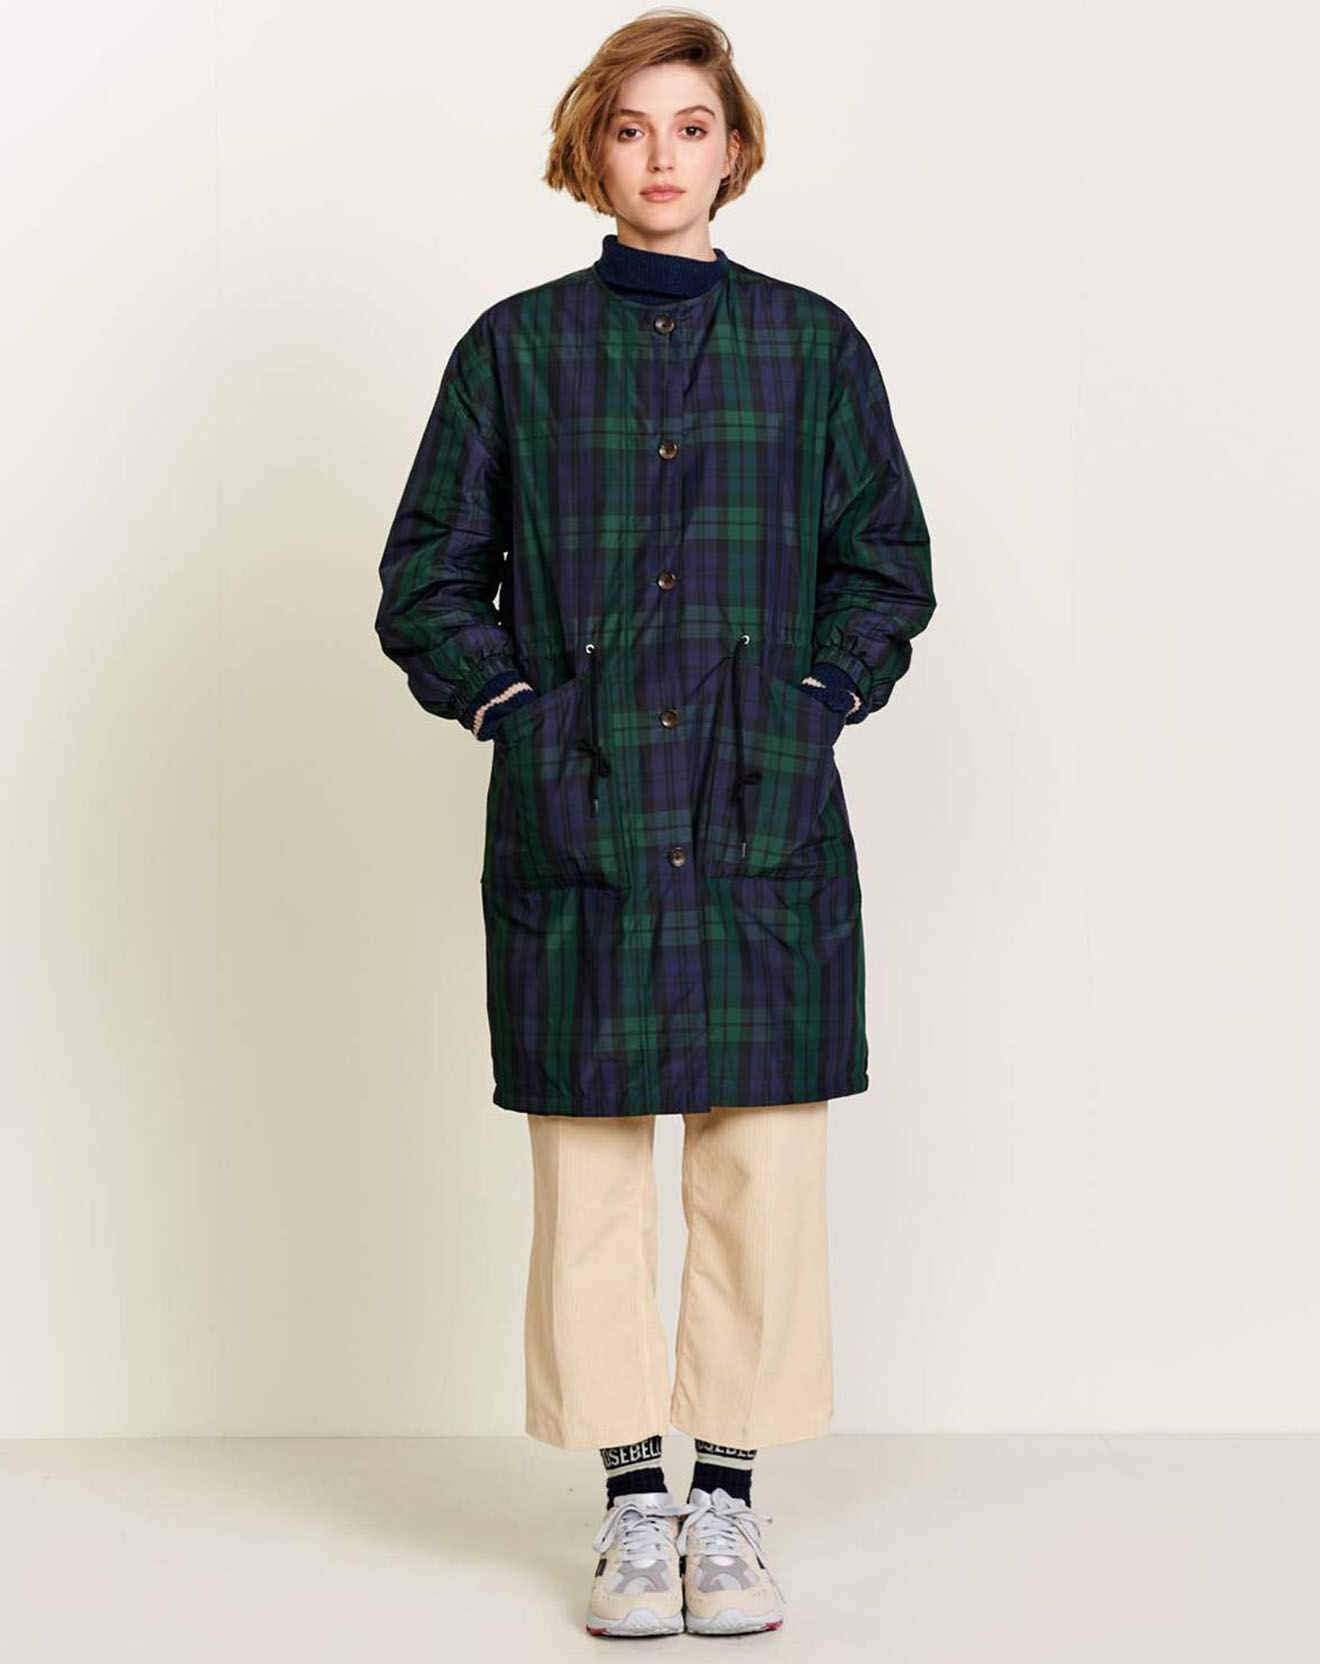 Manteau Harvey à carreaux tartan marine/vert